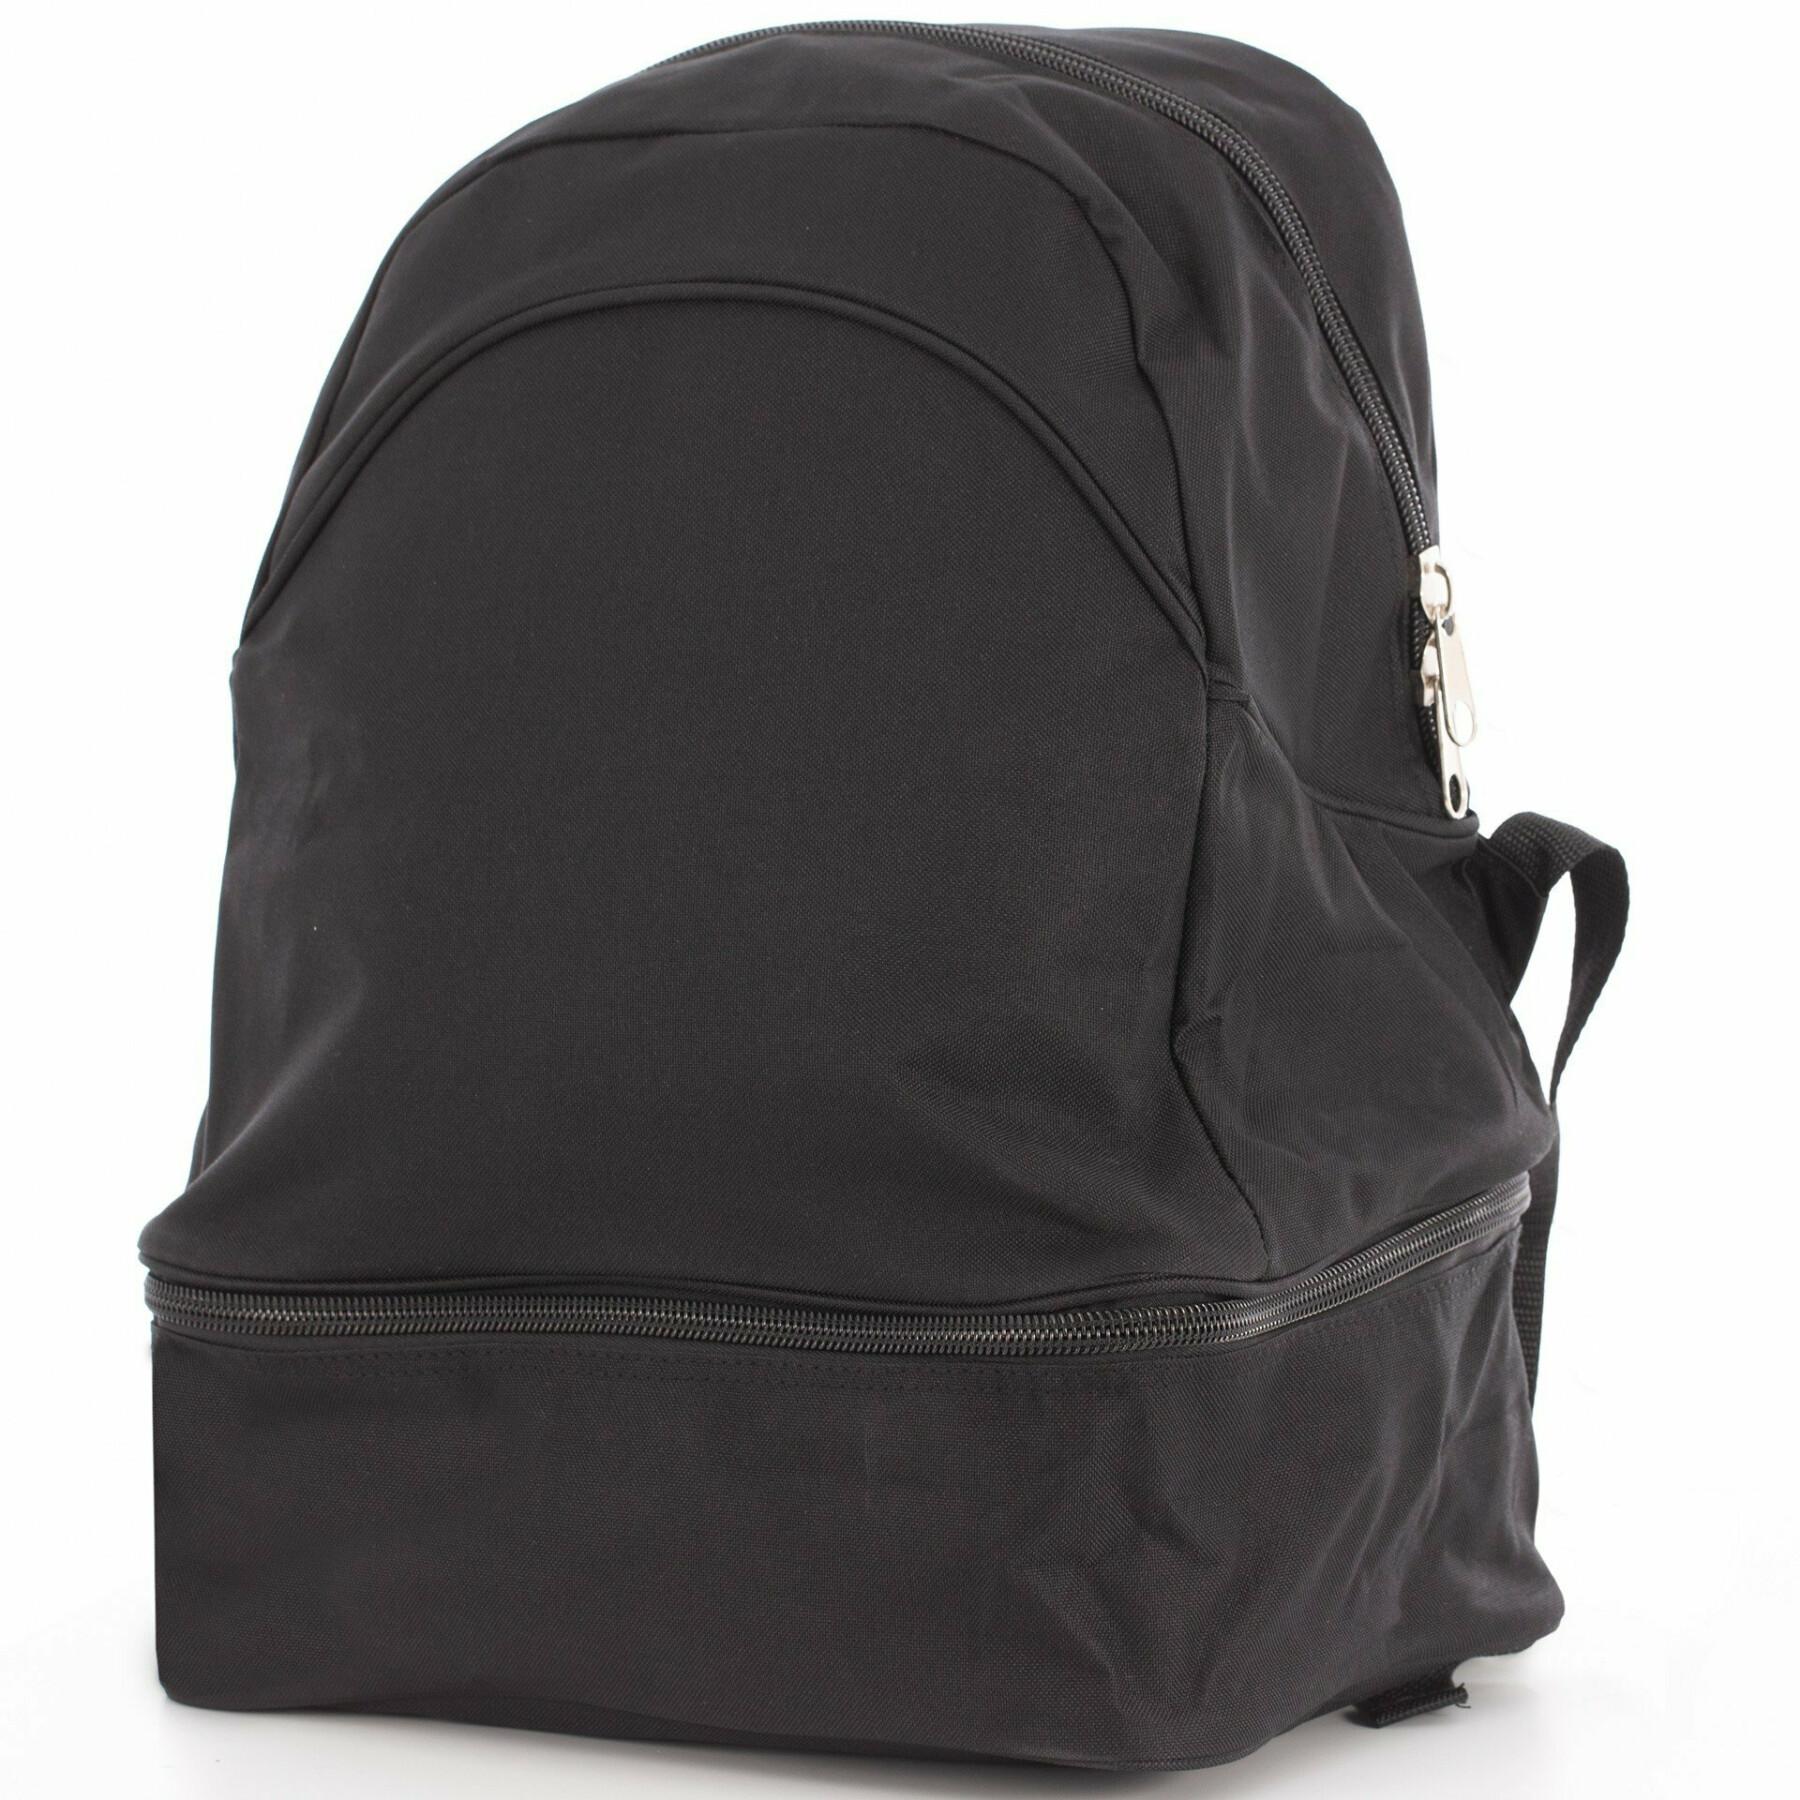 Backpack Softee Equipo